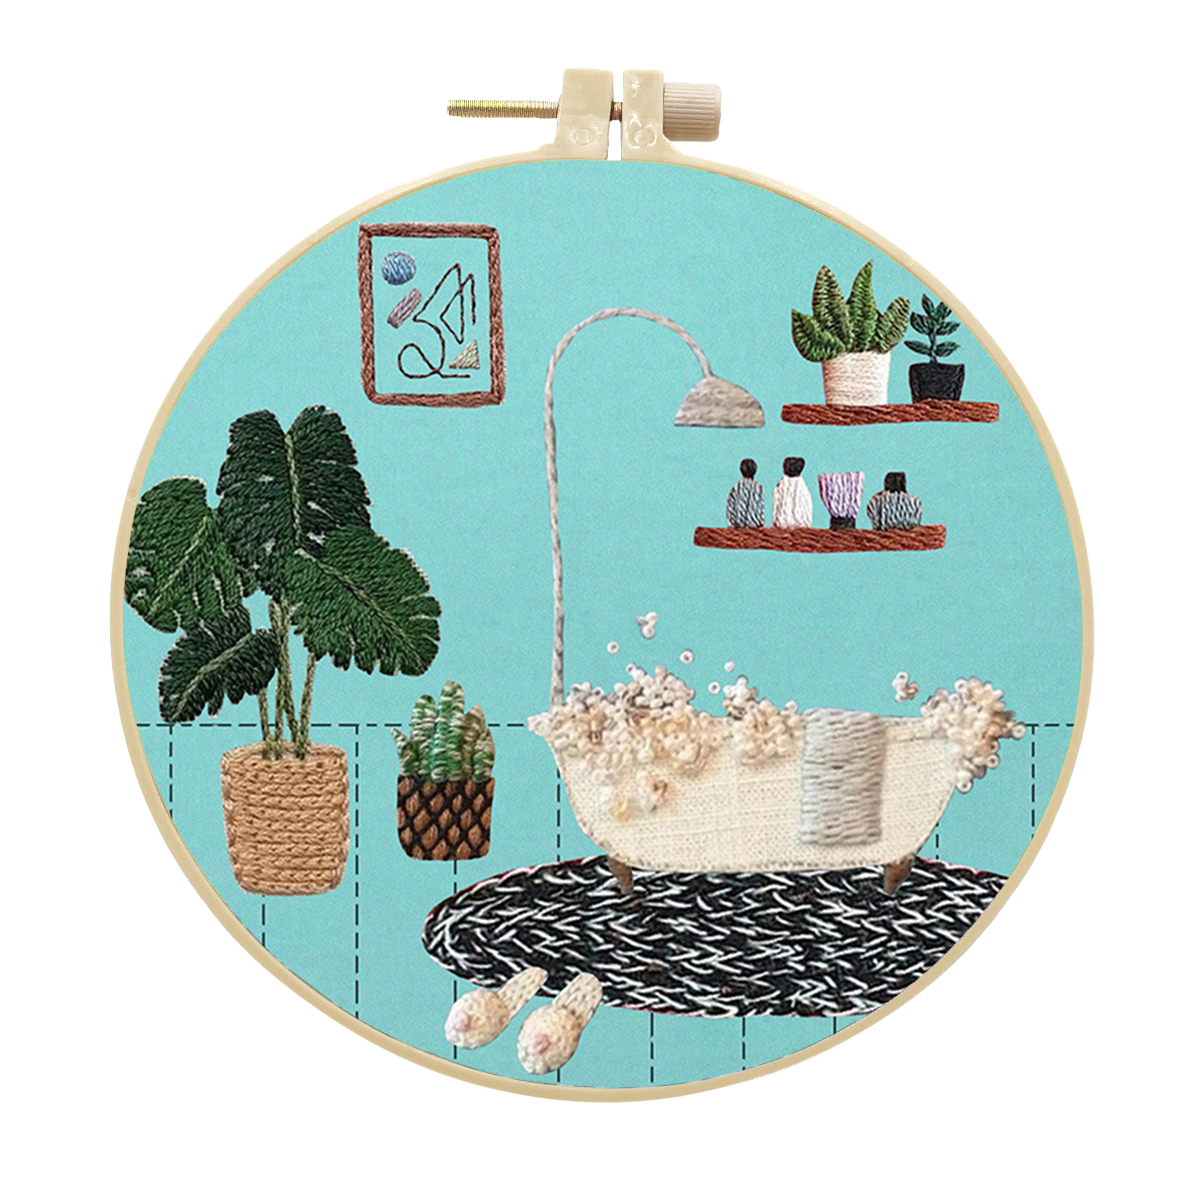 Handmade Embroidery Kit Cross stitch kit for Adult Beginner - Bathroom Pattern